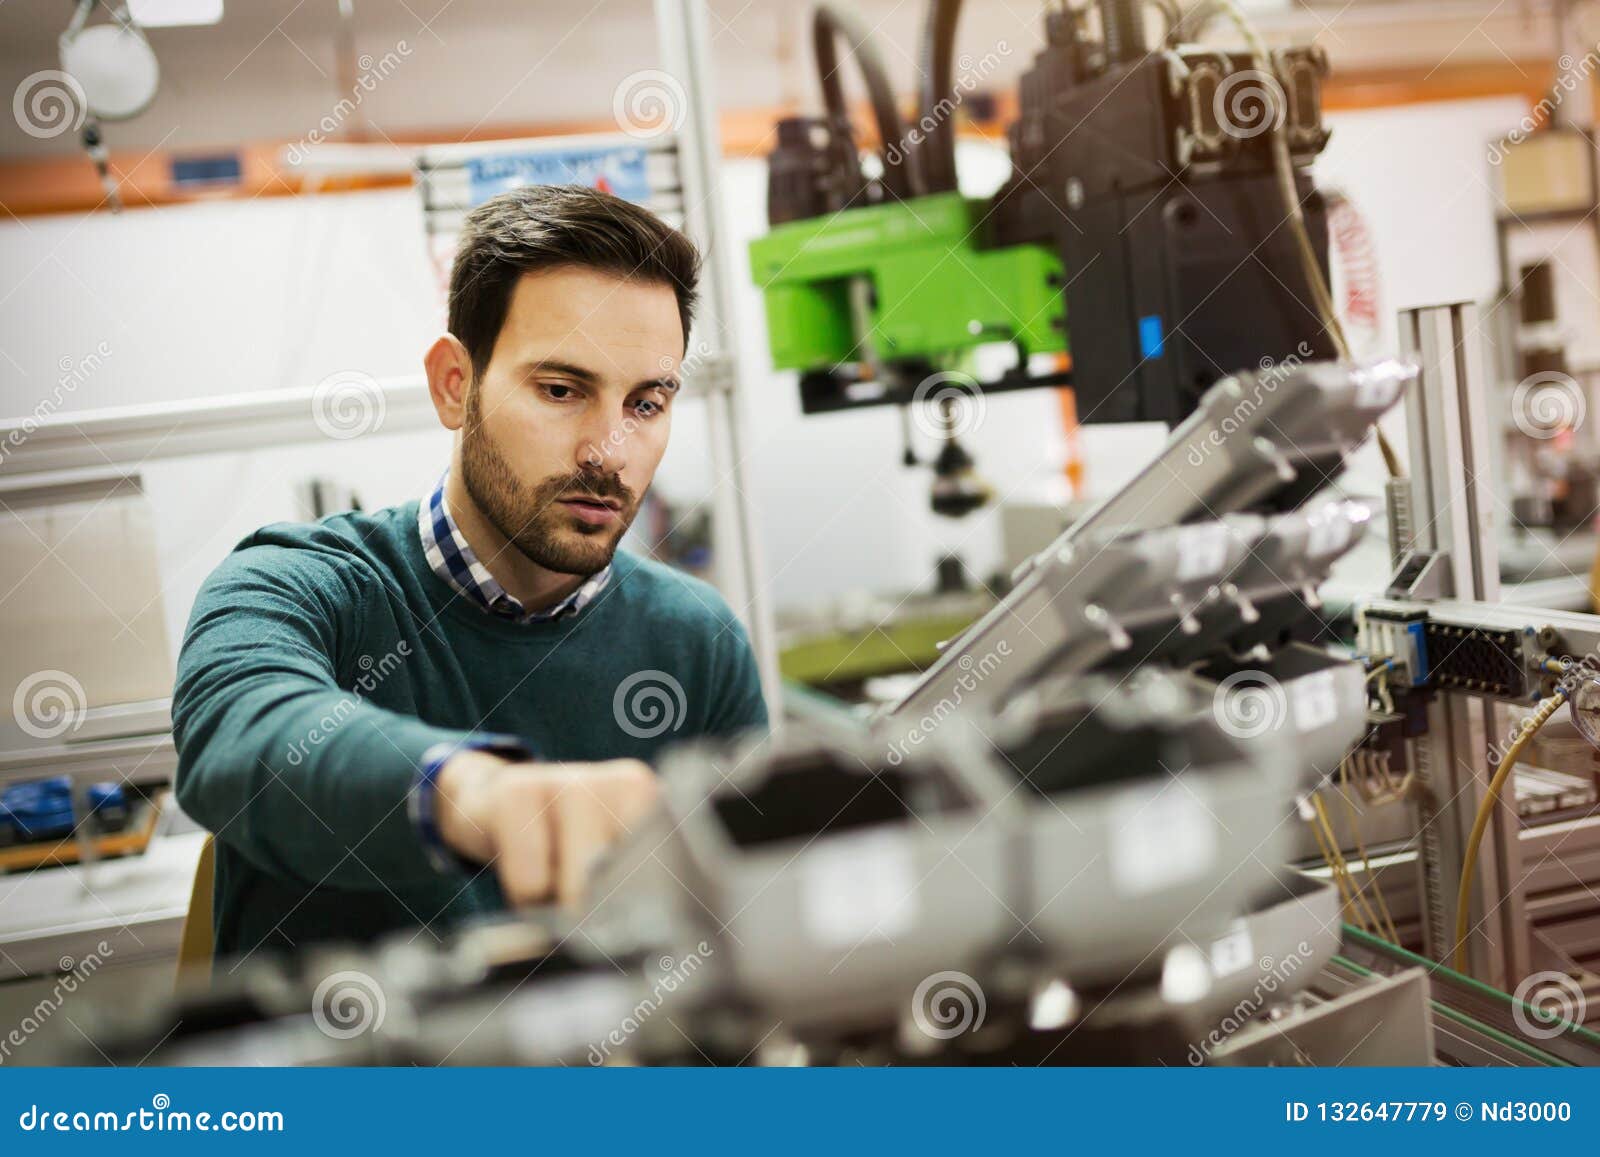 Mechanical Engineer Working on Machines Stock Image - Image of engineering,  instrument: 132647779